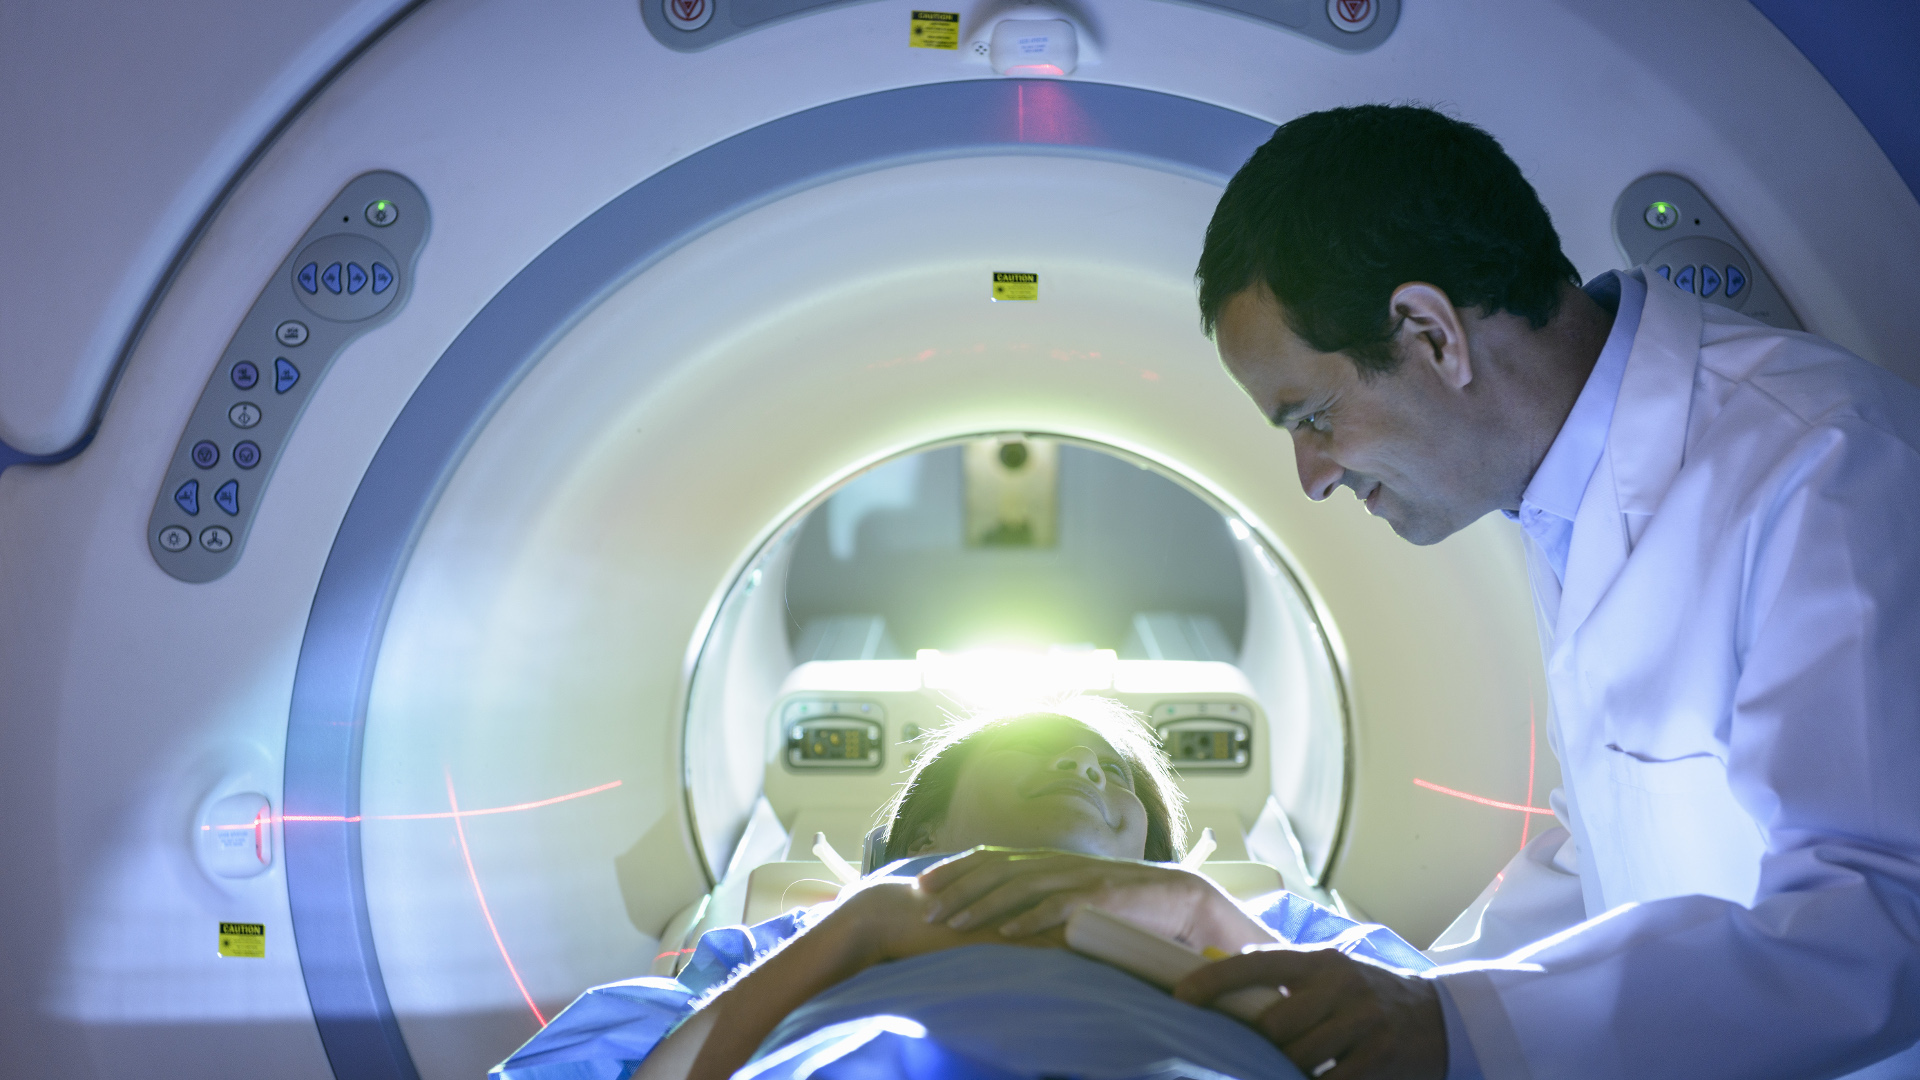 Tata Trusts' portable MRI scanner